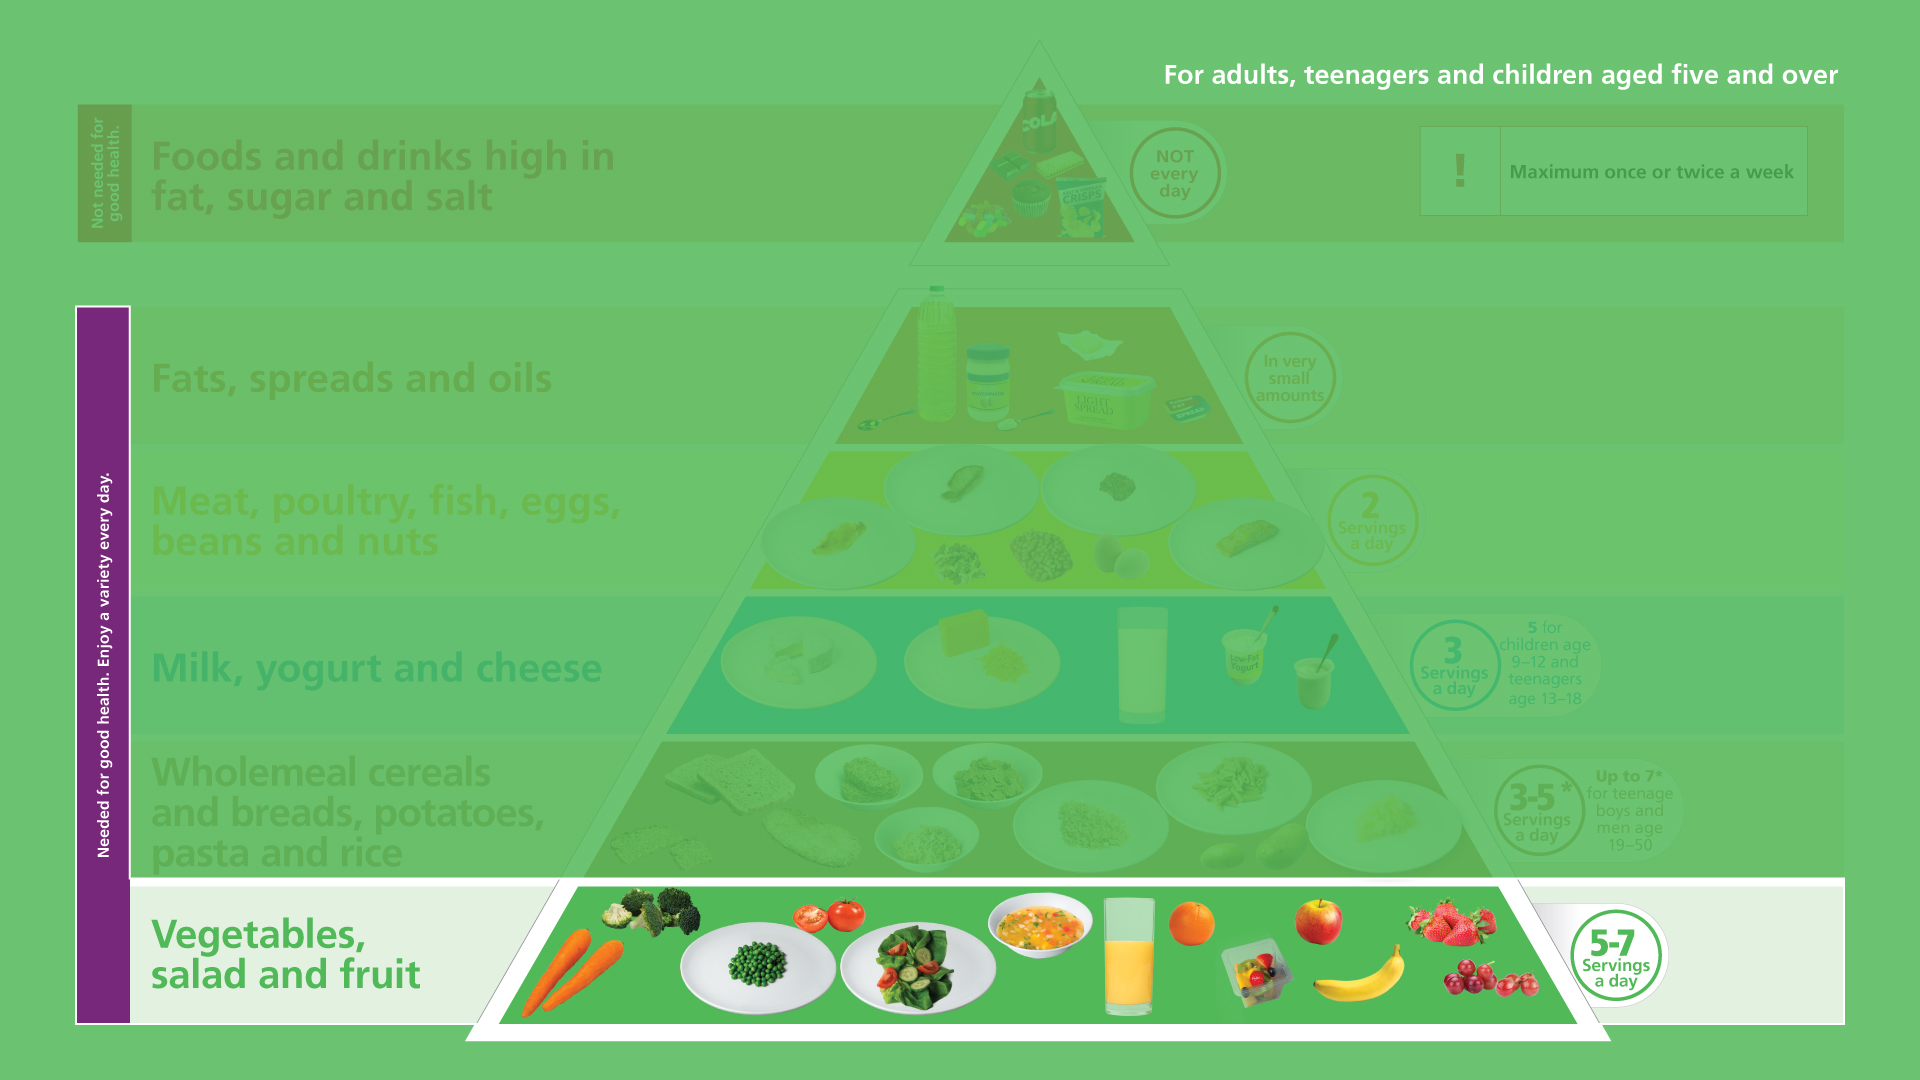 https://www.safefood.net/getmedia/b9ce366d-318c-4e07-8f7a-db85ac736726/Safefood-Food-Pyramid-Vegetables-Salad-Fruit.jpg?width=1920&height=1080&ext=.jpg